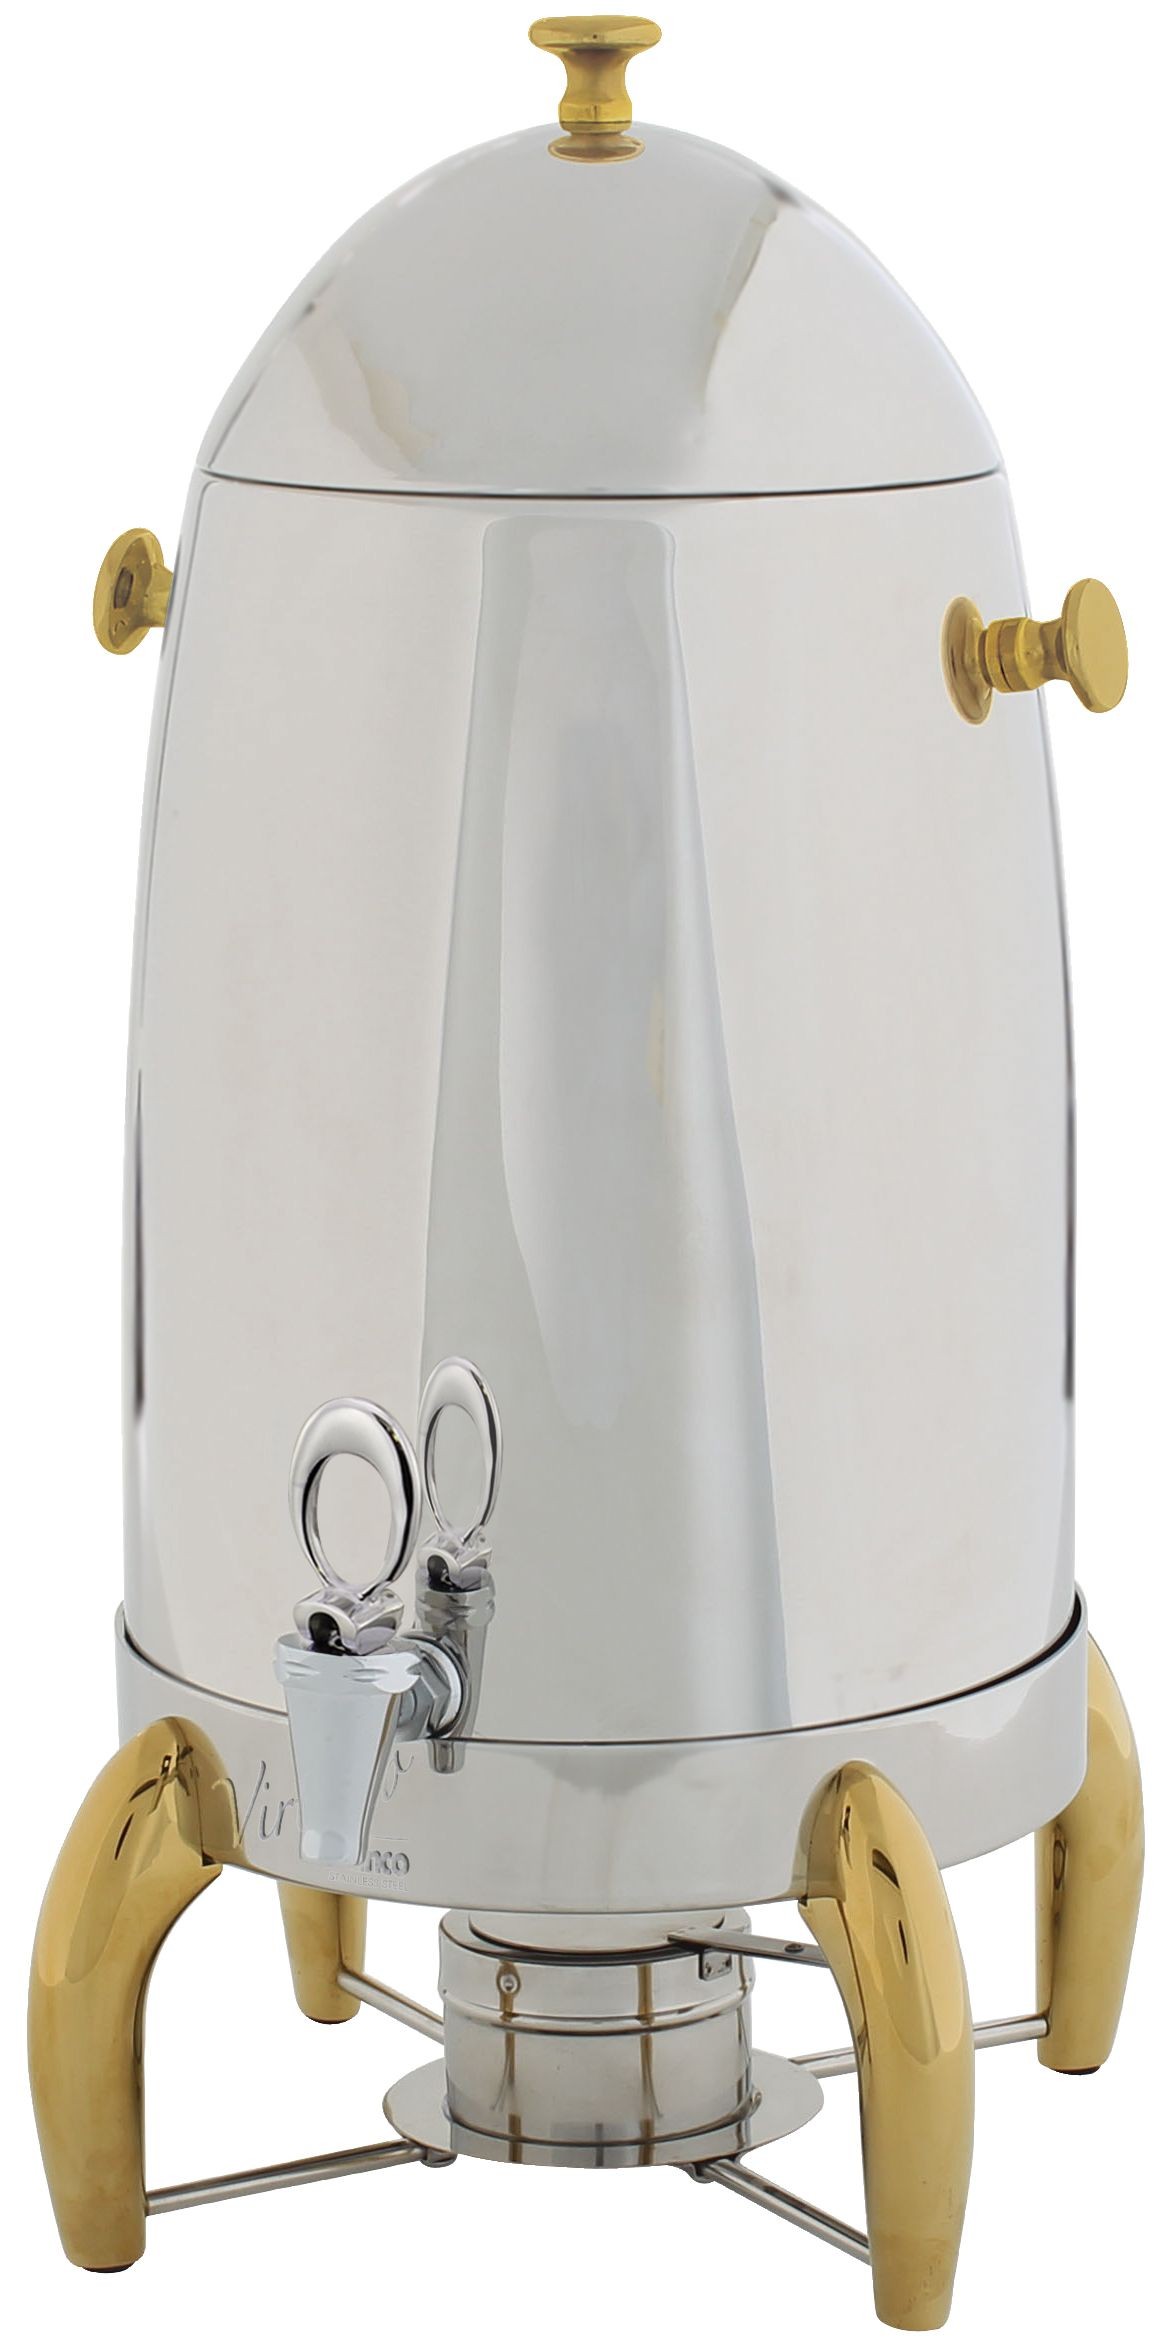 Winco 905A Virtuoso Coffee Urn with Gold Legs, 5 Gallon